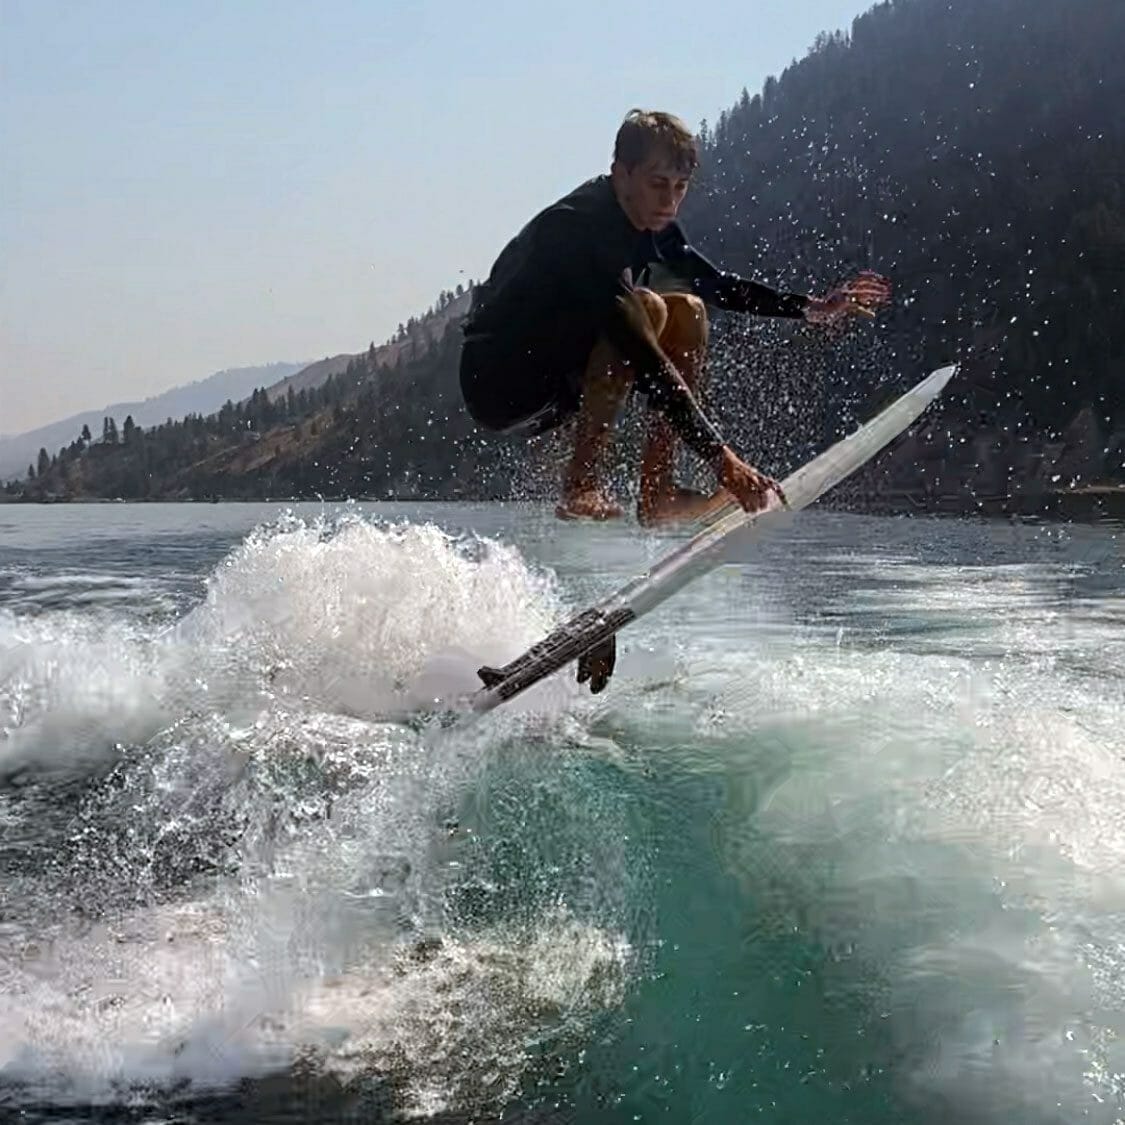 Turner Gebers wake surfing